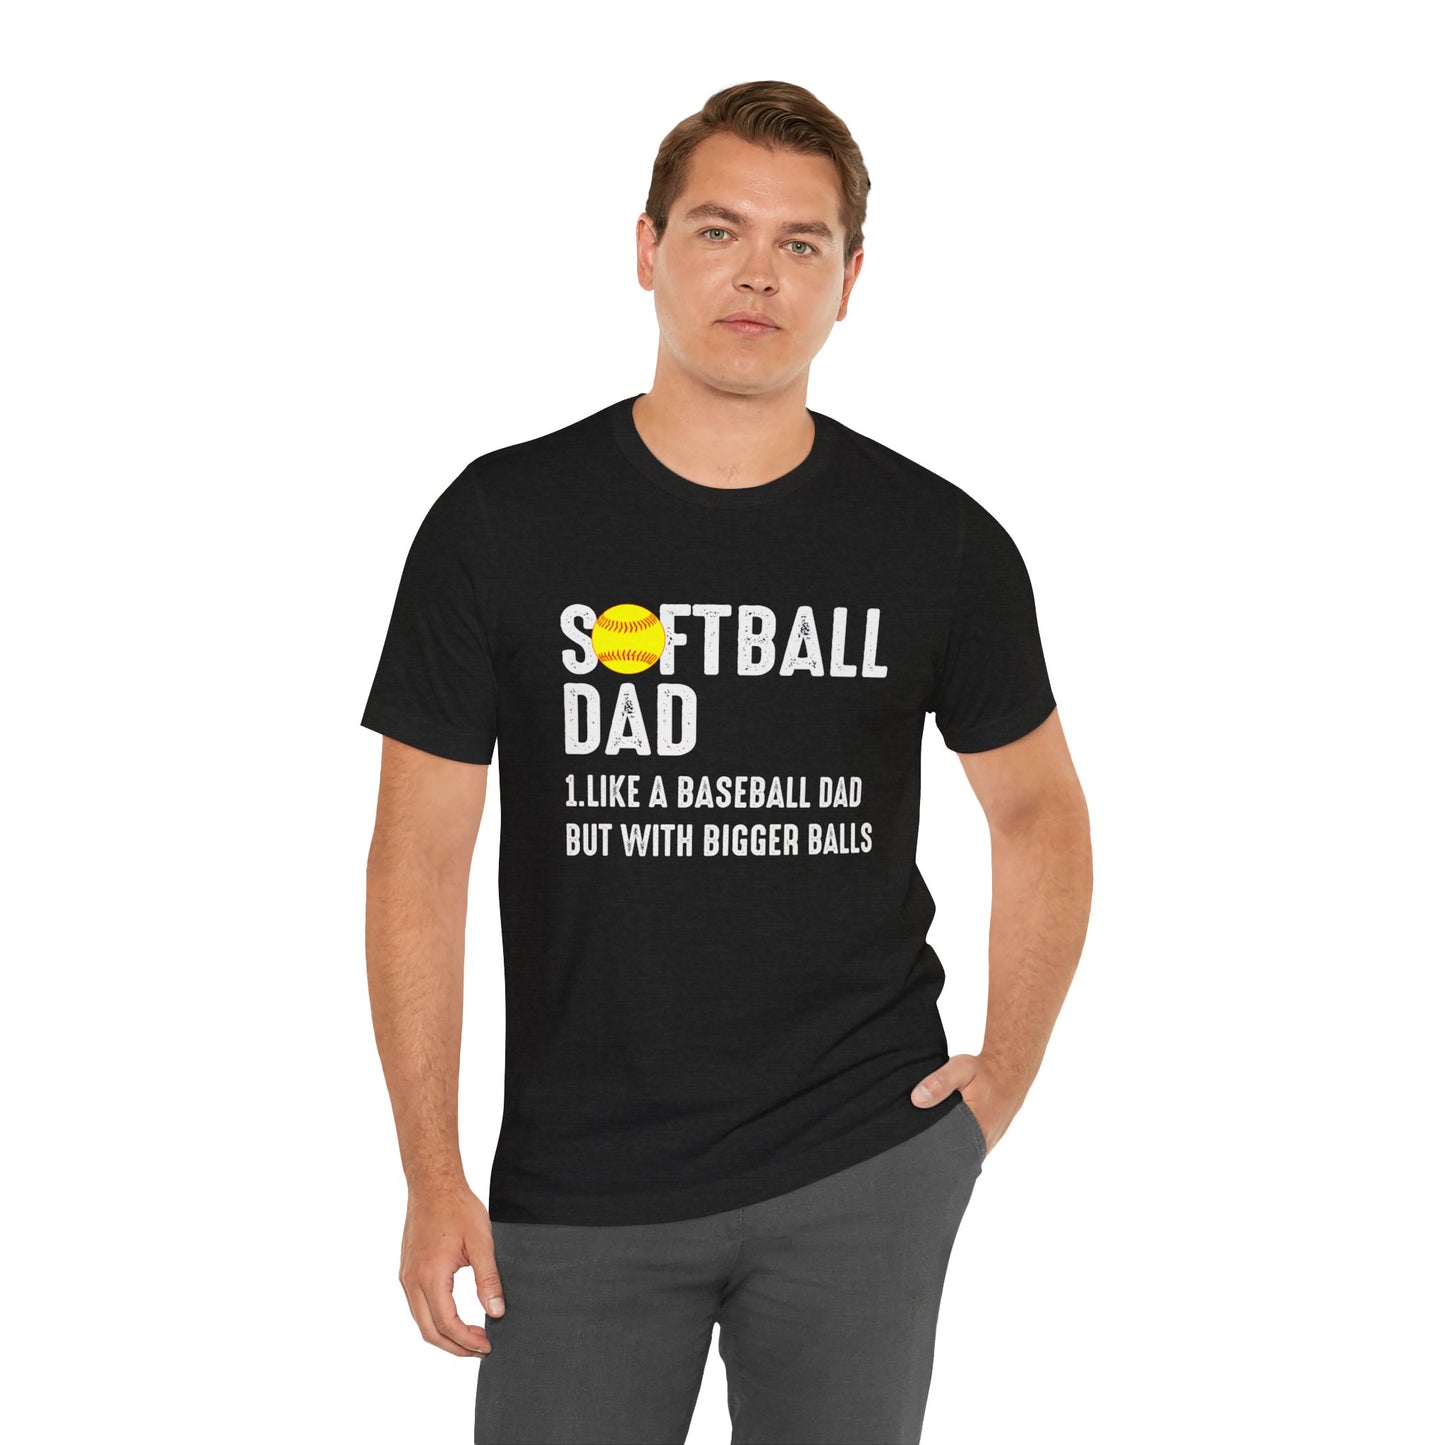 Softball Dad Funny Short Sleeve Shirt